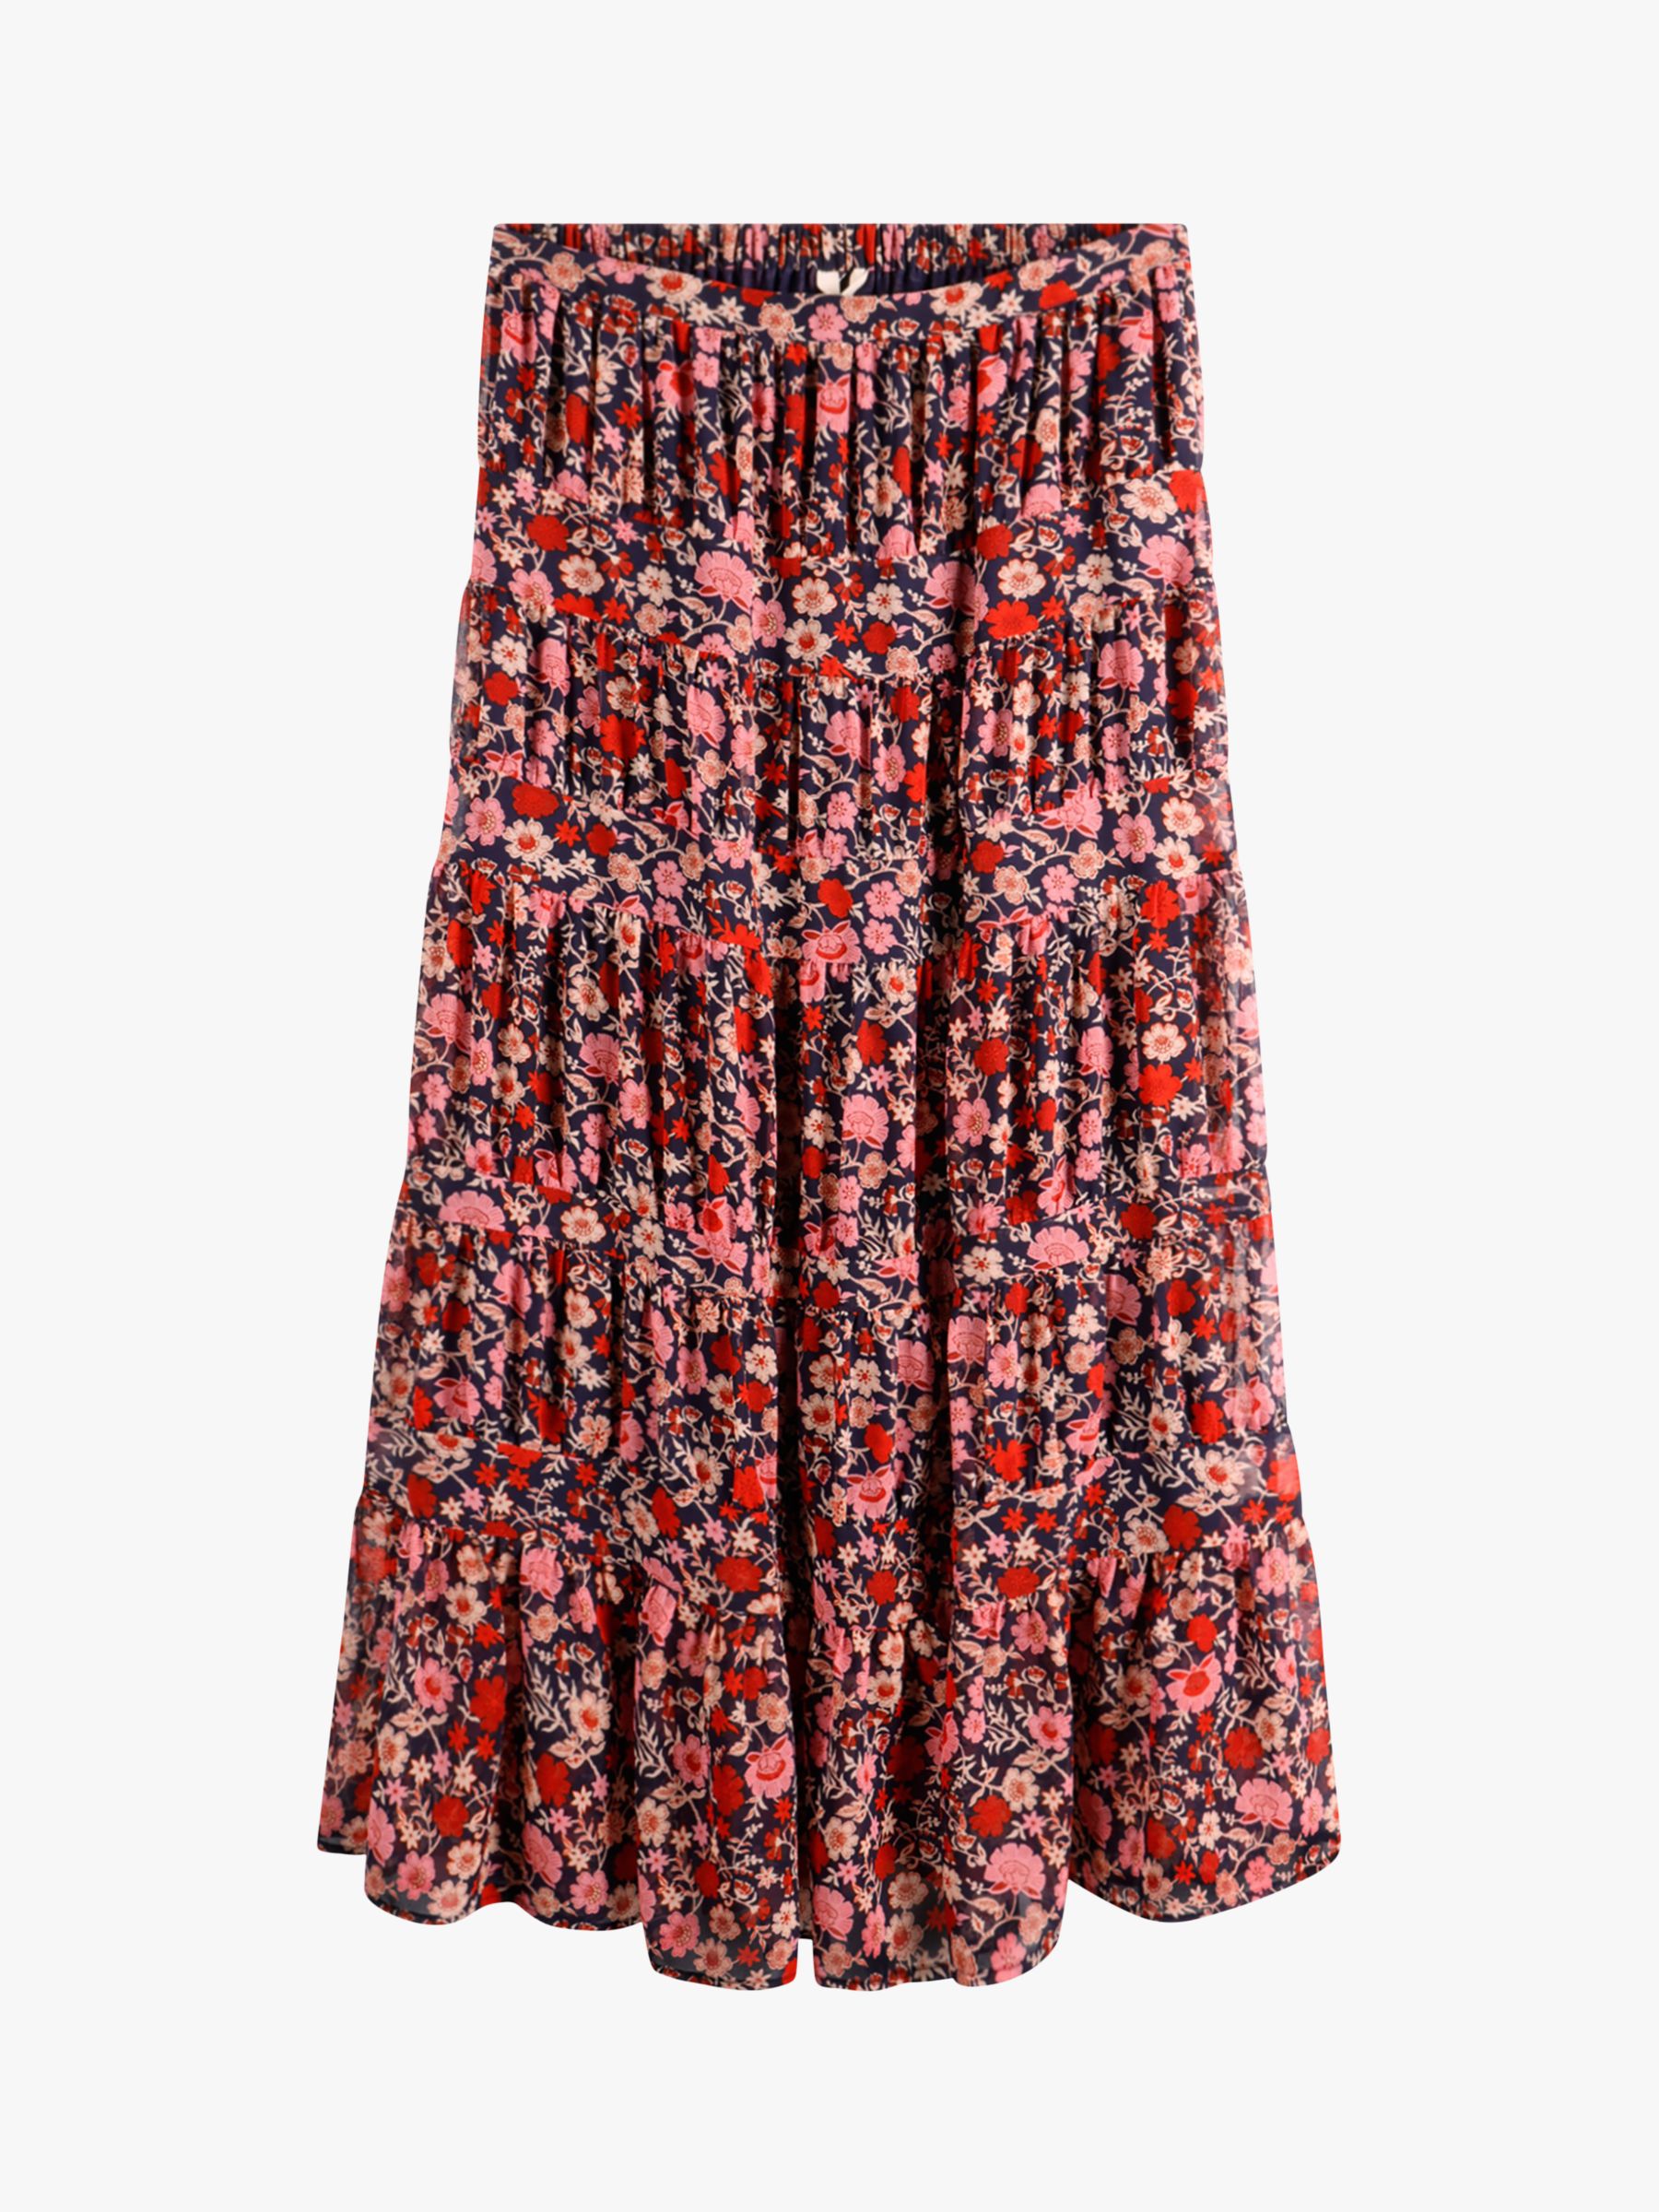 HUSH Gaby Floral Print Gathered Maxi Skirt, Multi, 4